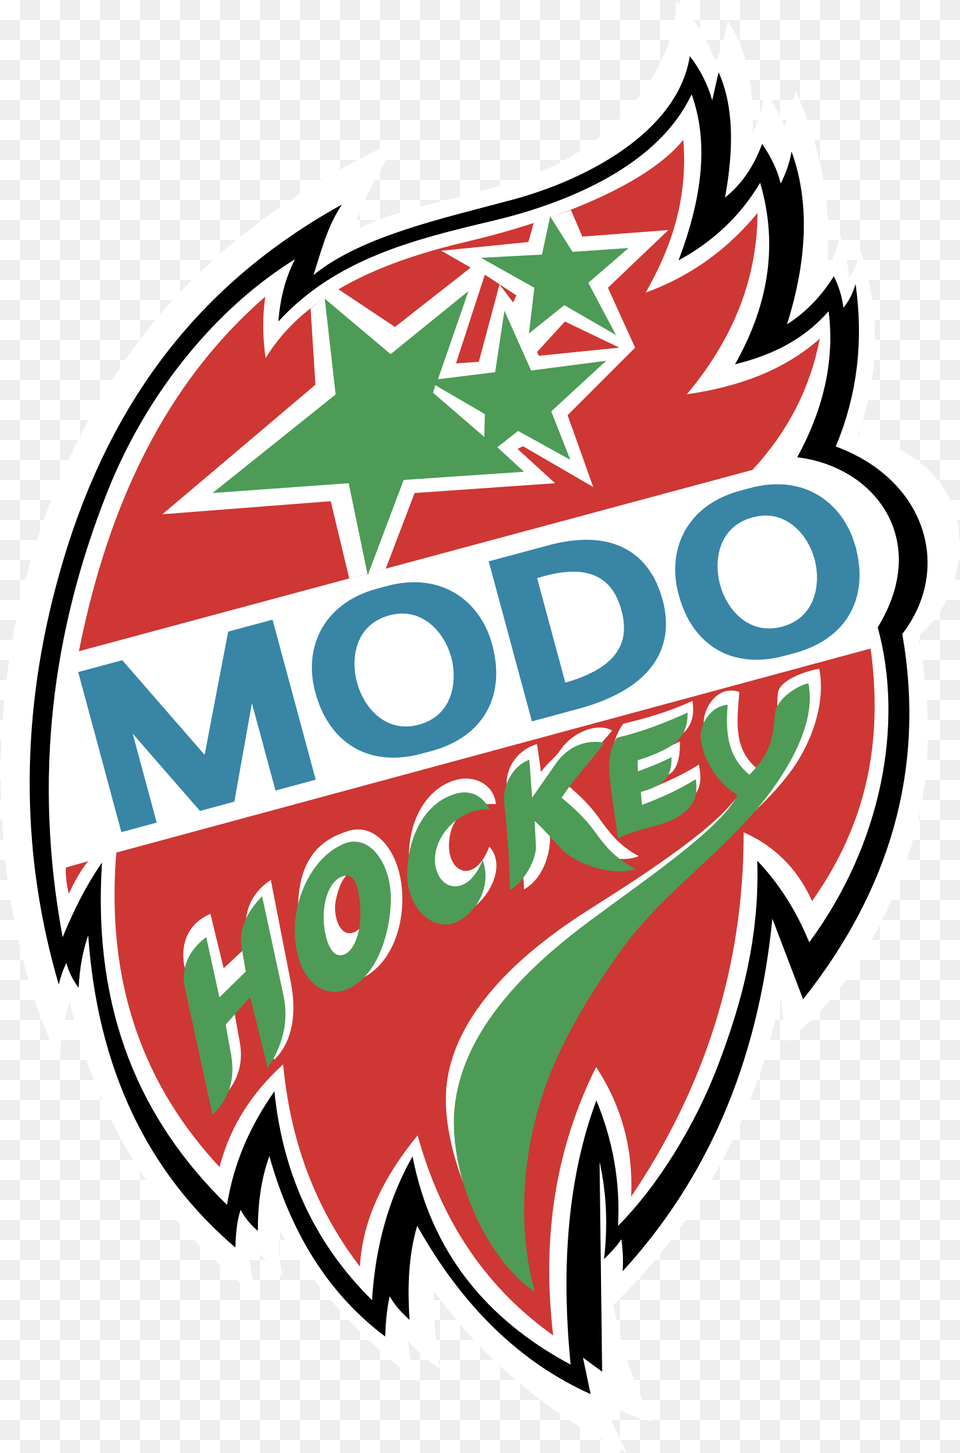 Modo Hockey Logo Modo Hockey, Dynamite, Weapon, Symbol Png Image